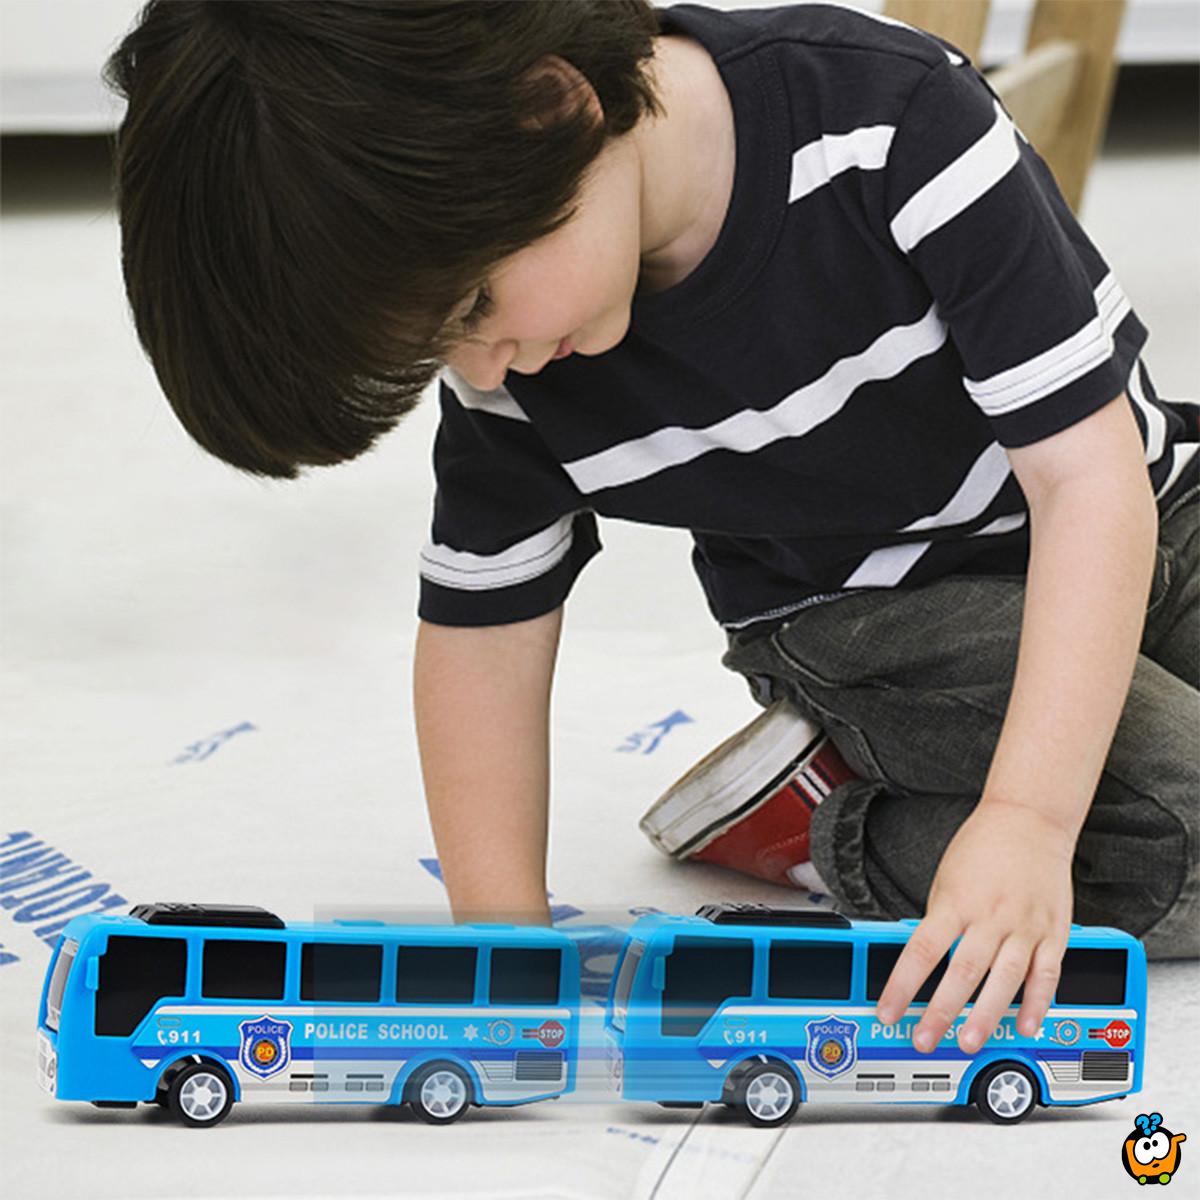 Bus Toy - Igračka mini autobus sa mehanizmom povlačenja